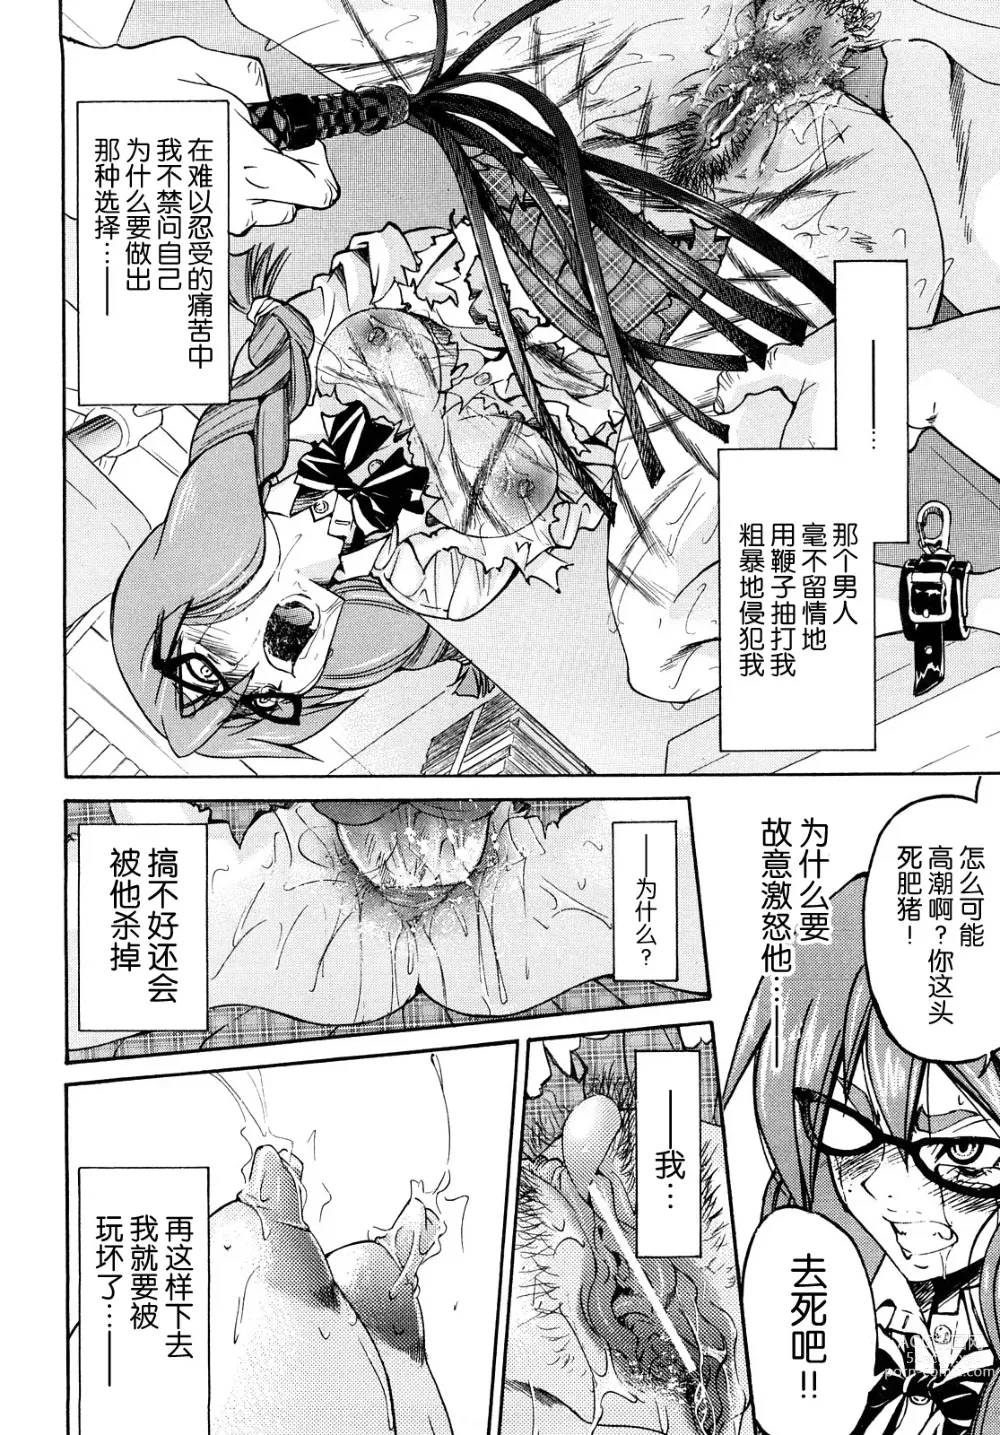 Page 25 of manga Shibarare Hime